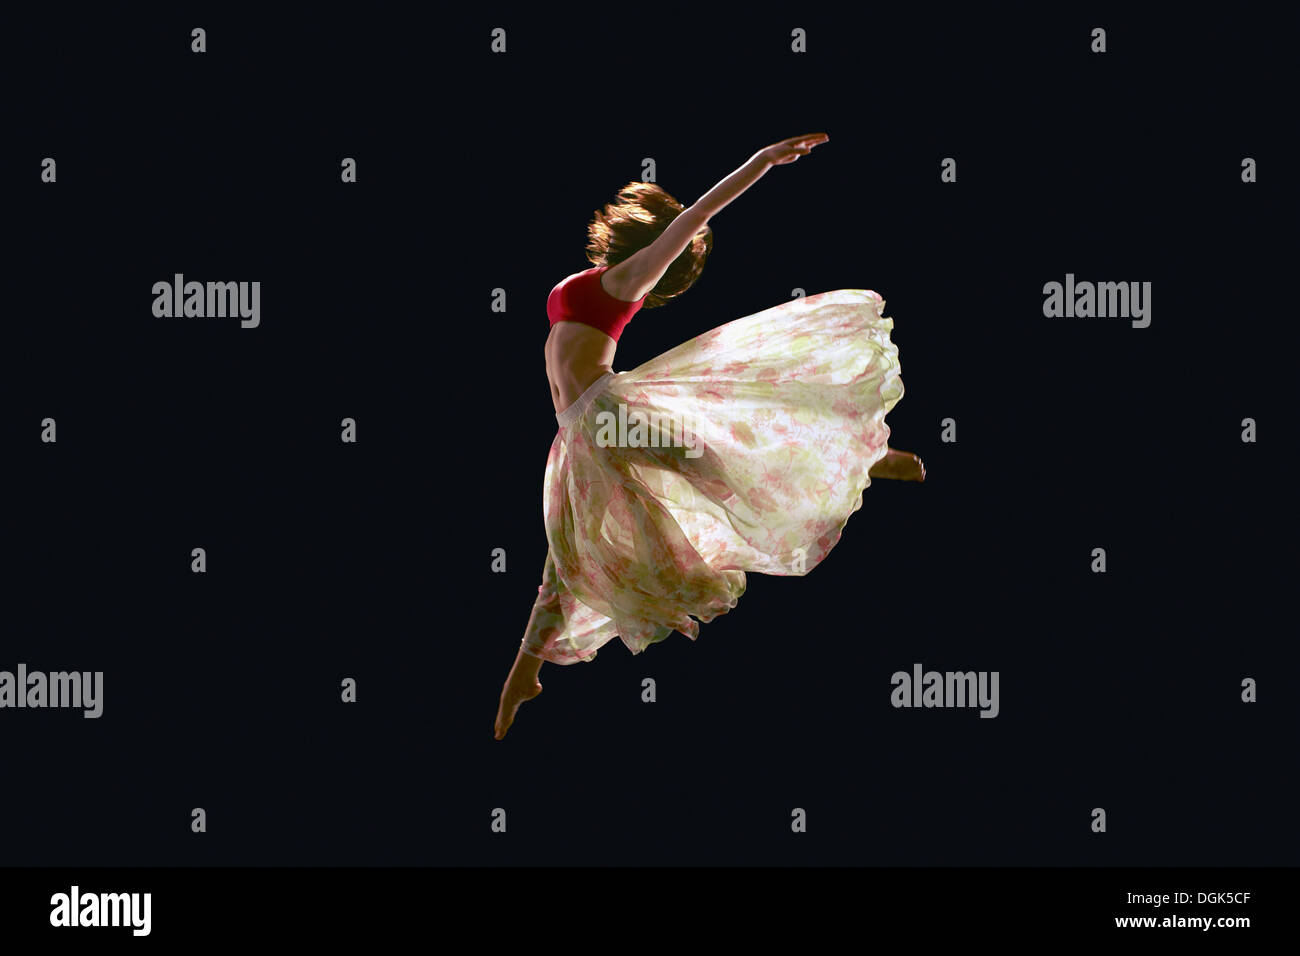 Dancer in midair wearing tutu Stock Photo